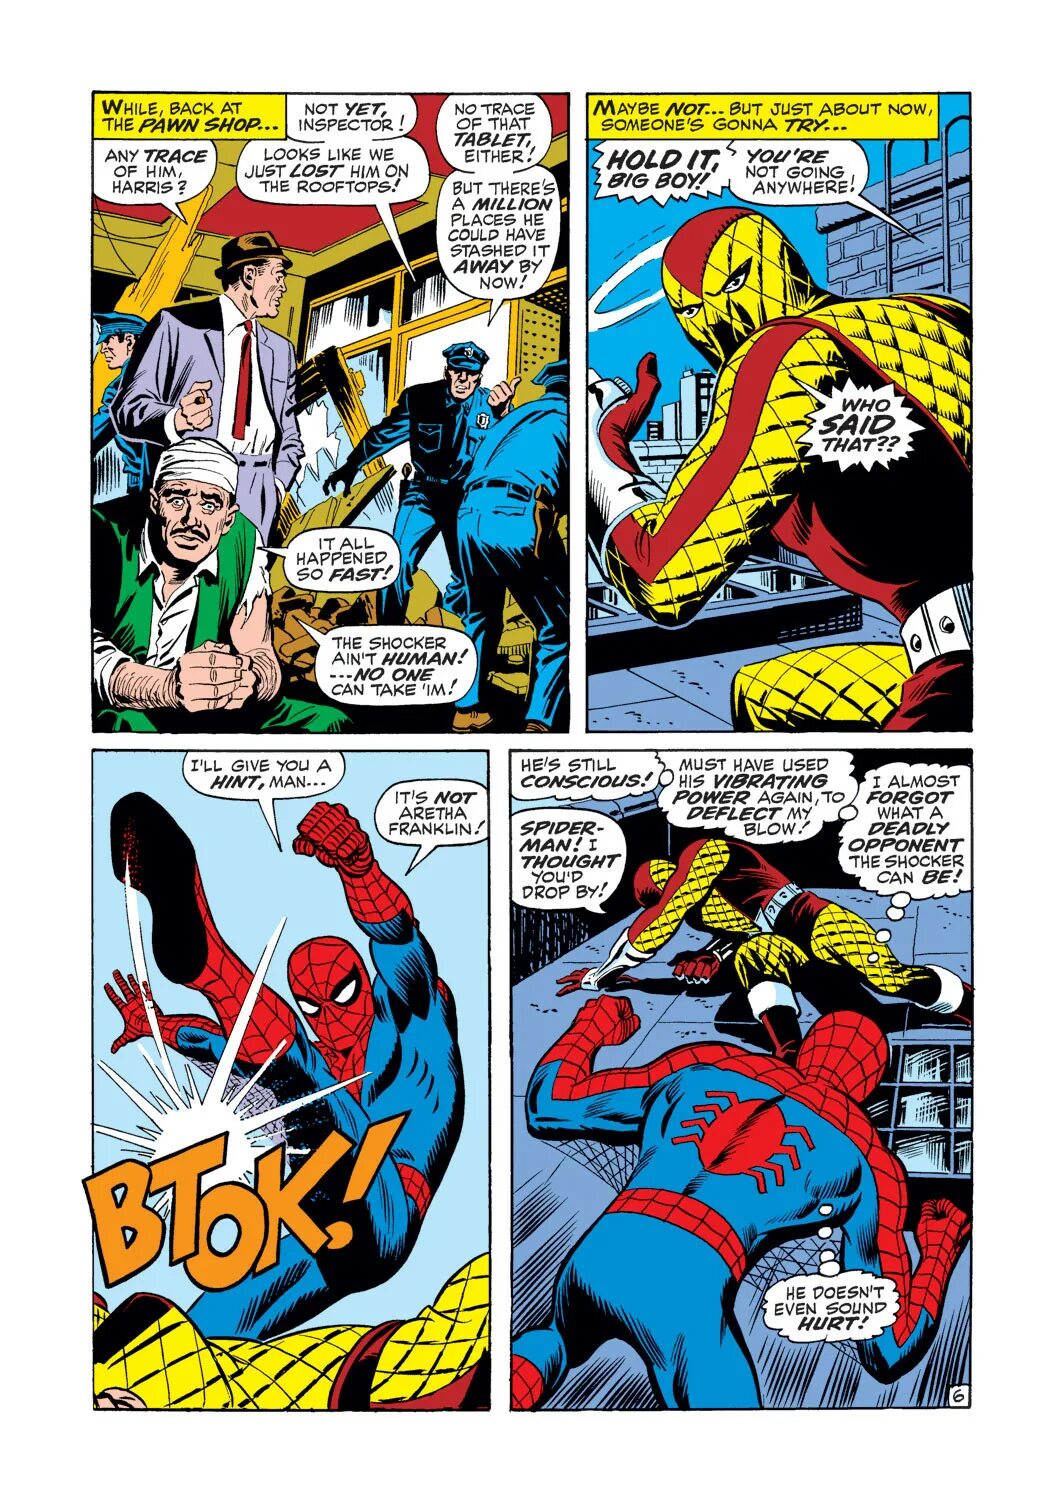 Amazing Spider man 72. Shocker Marvel. Amazing Spider-man Annual Vol 1 8 Shocker. Shocker John Romita SR..